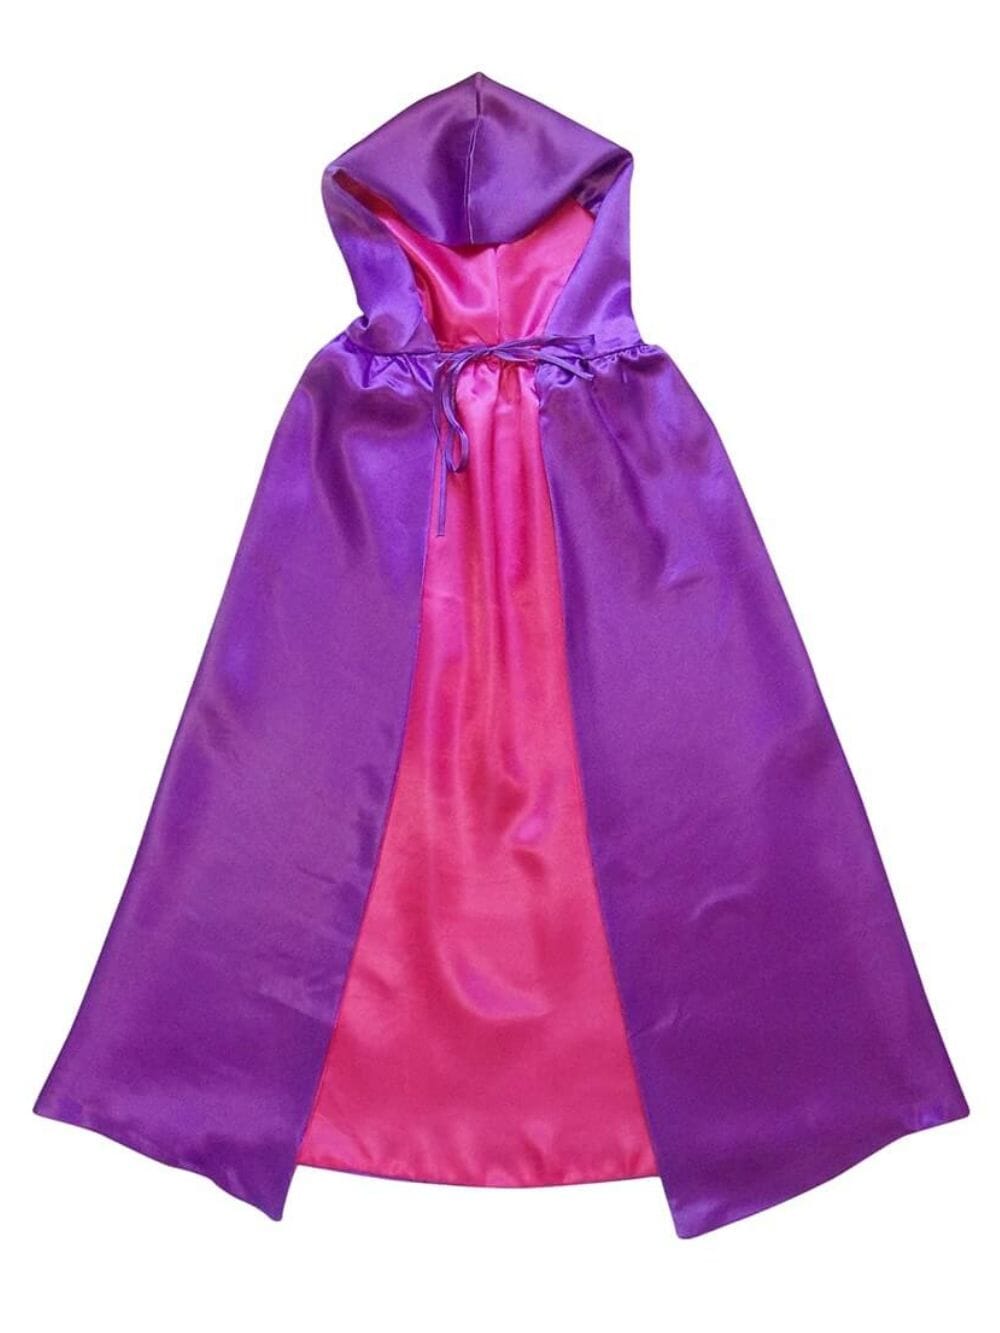 Purple & Hot Pink Hooded Cape, Superhero or Princess Reversible Hooded Cloak - Sydney So Sweet